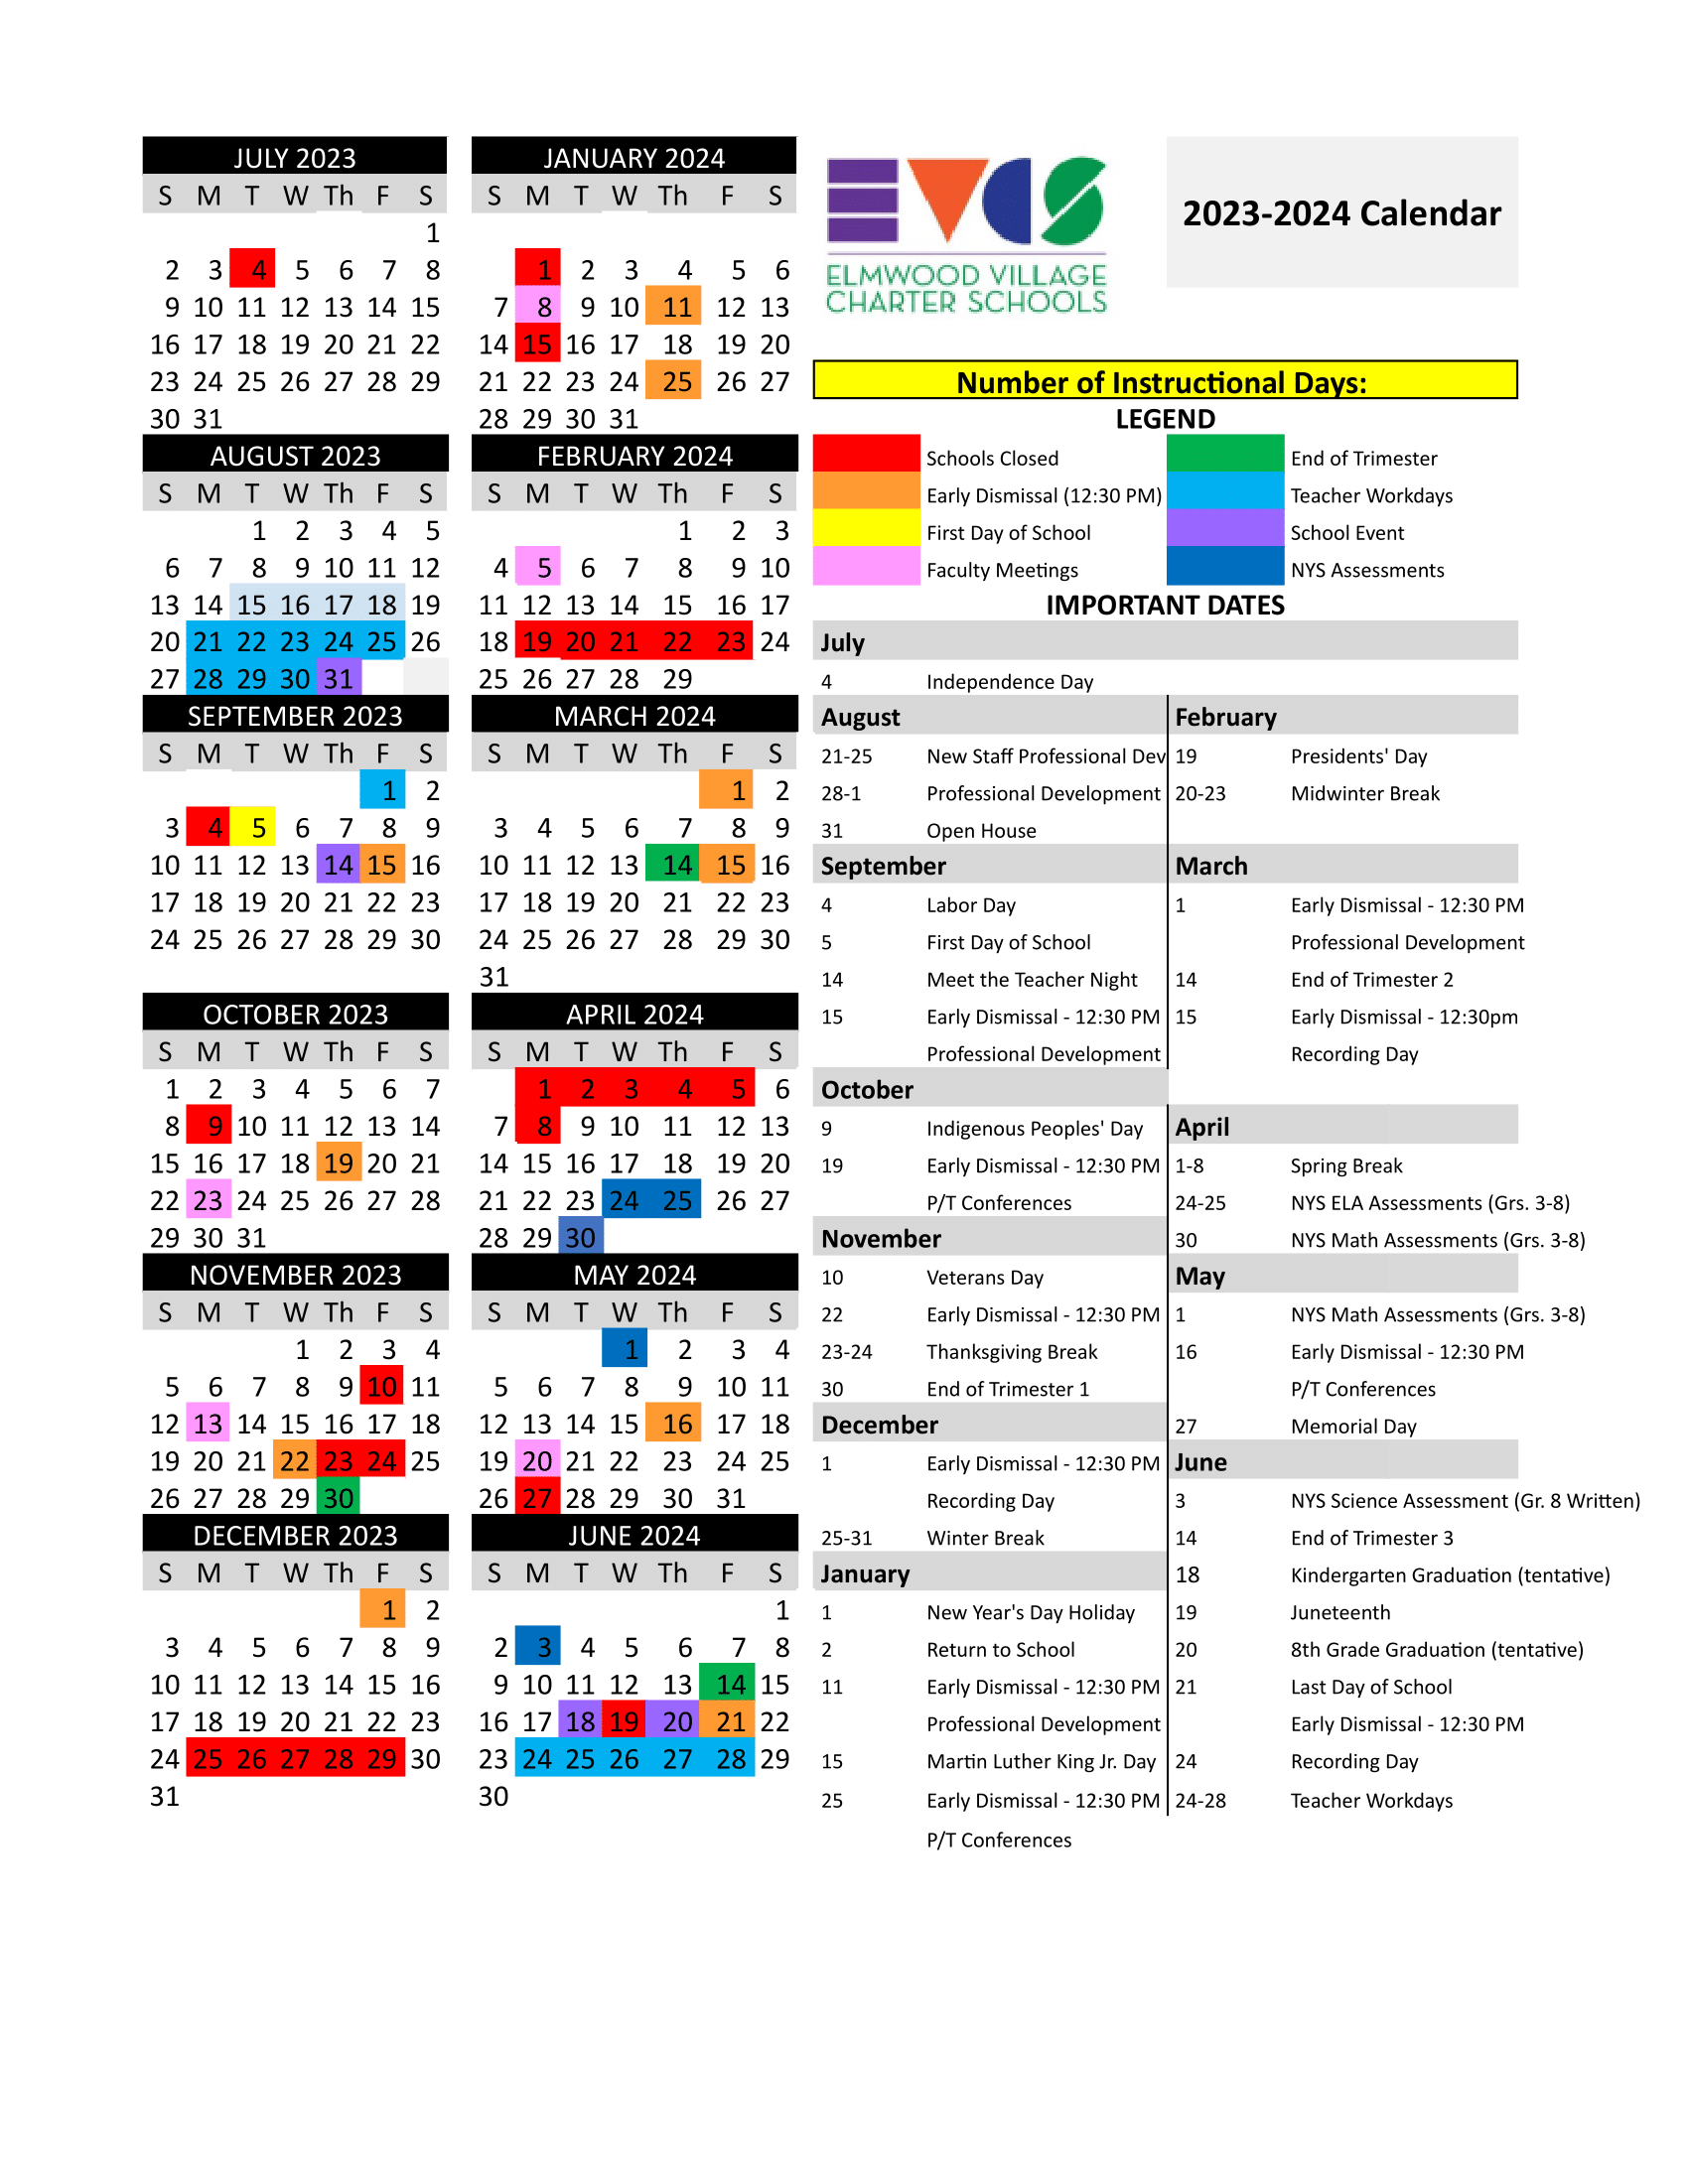 elmwood-village-charter-schools-calendar-master